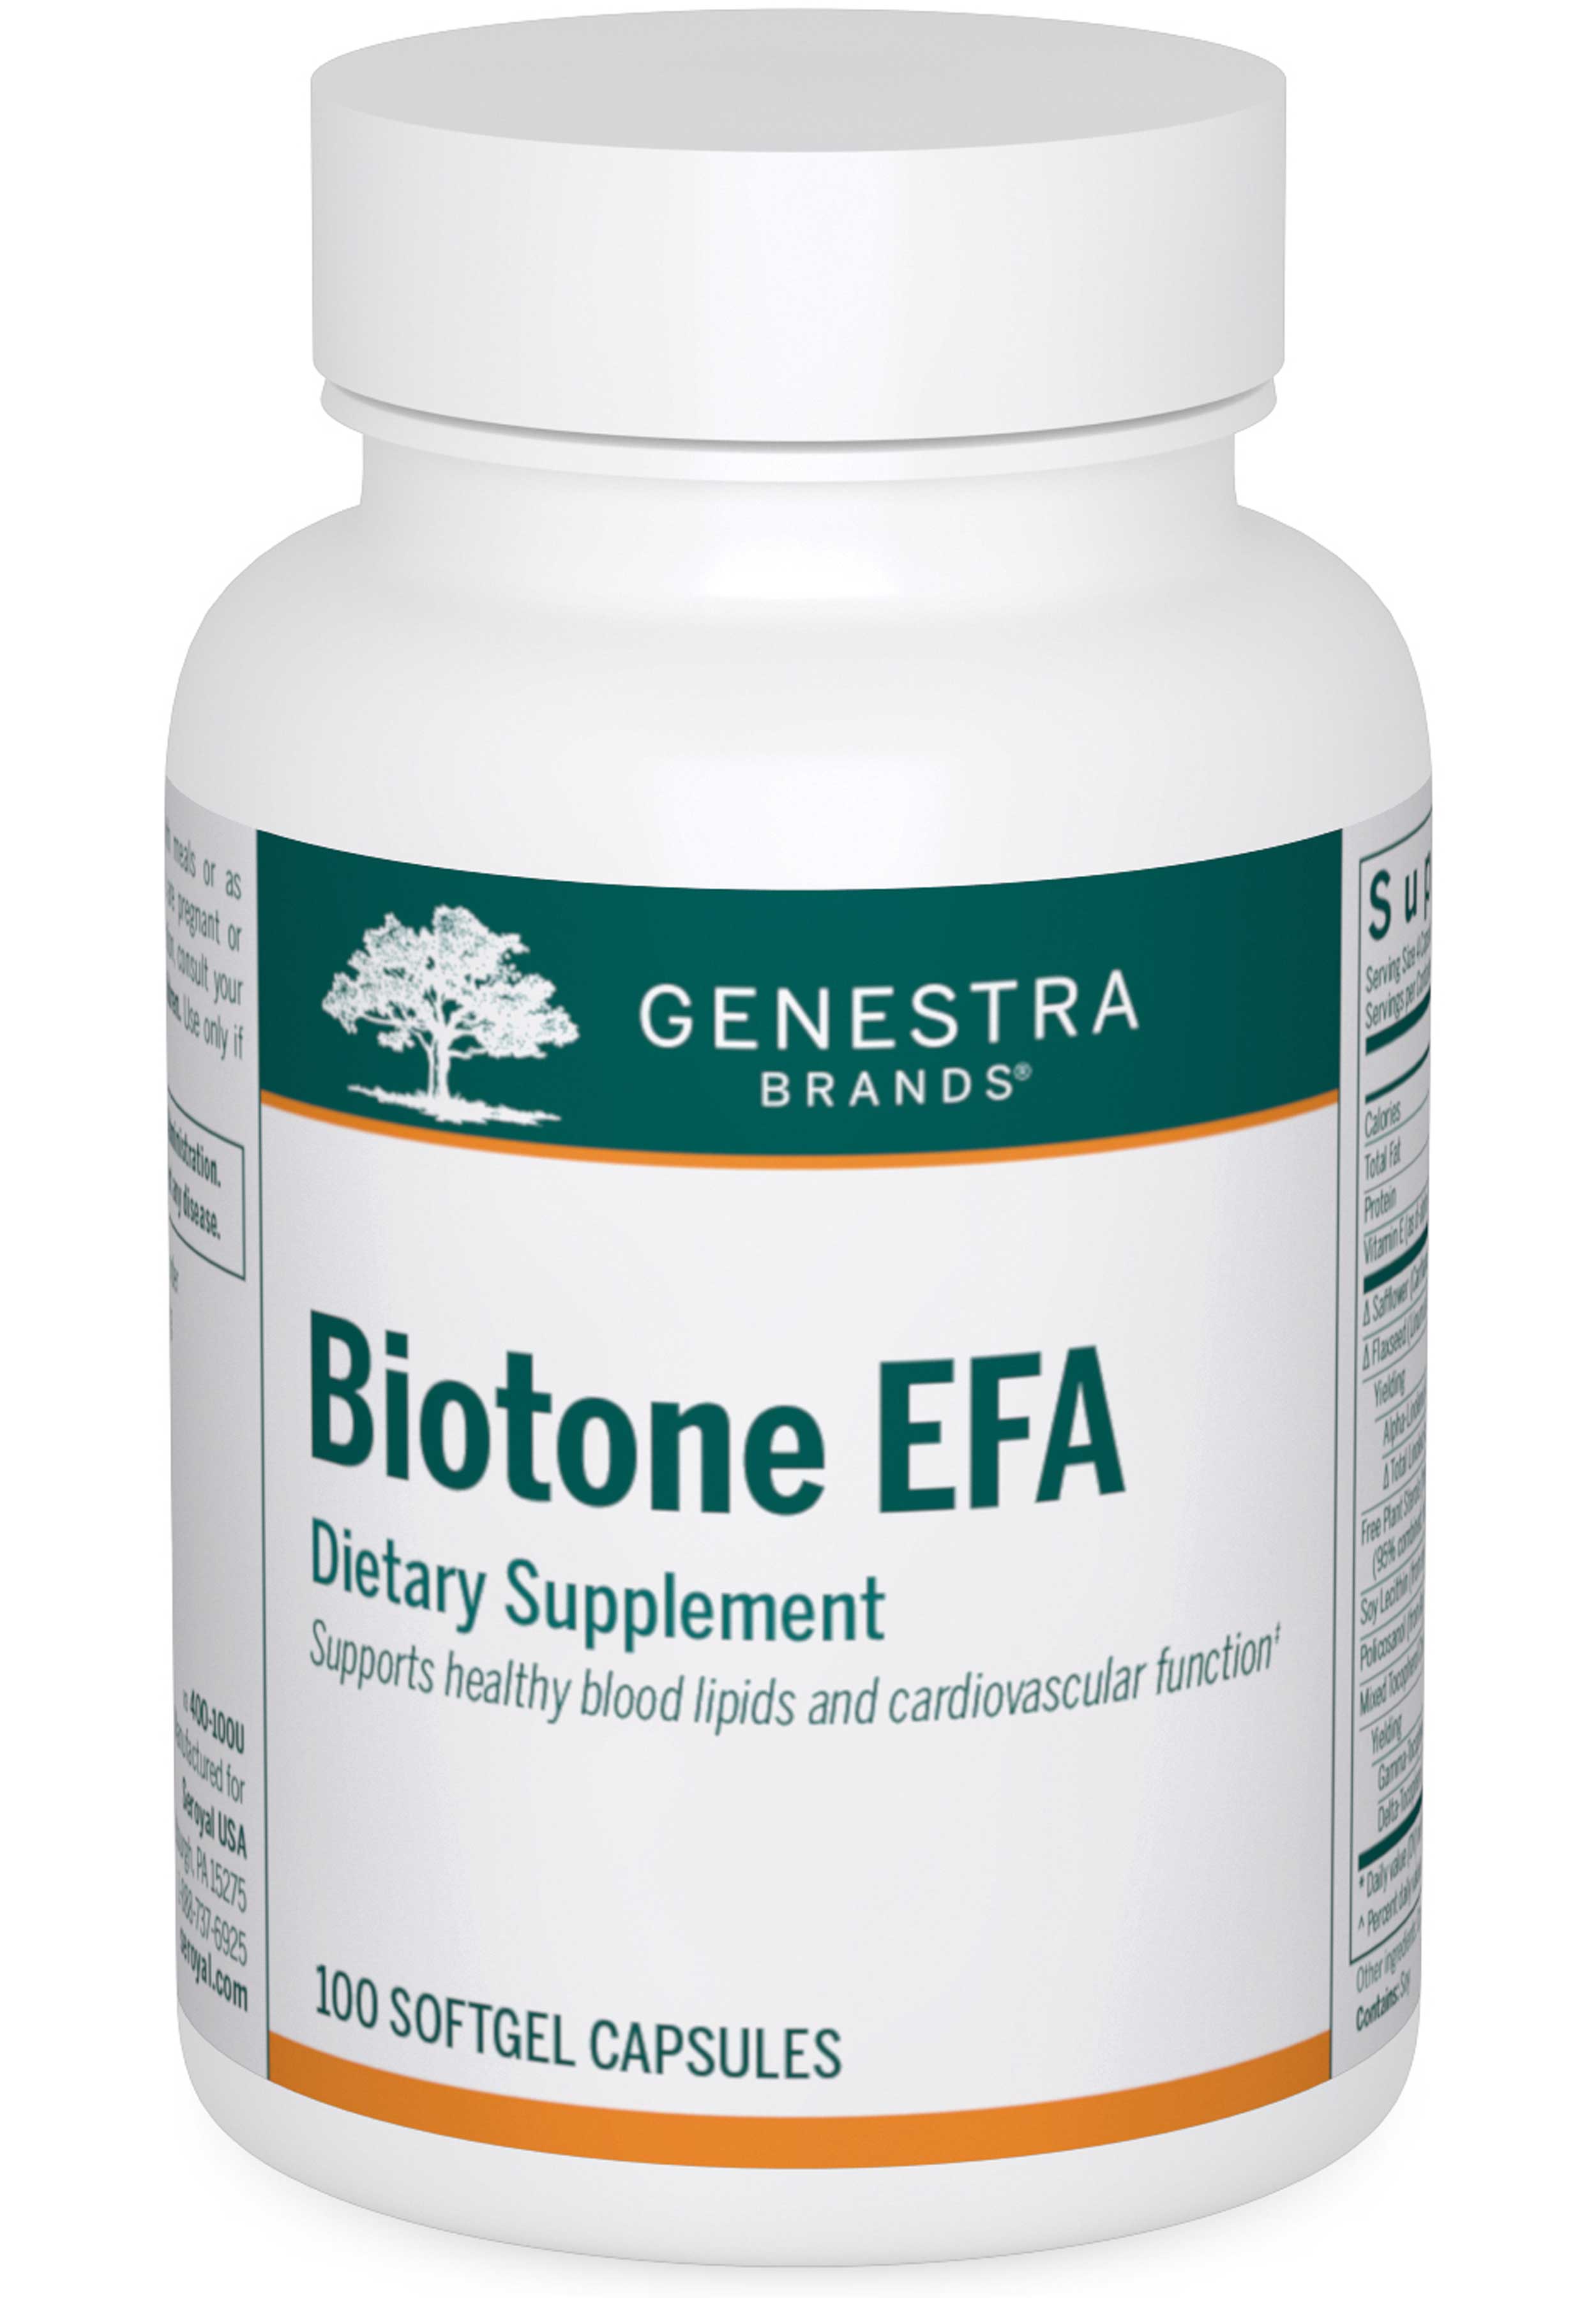 Genestra Brands Biotone EFA